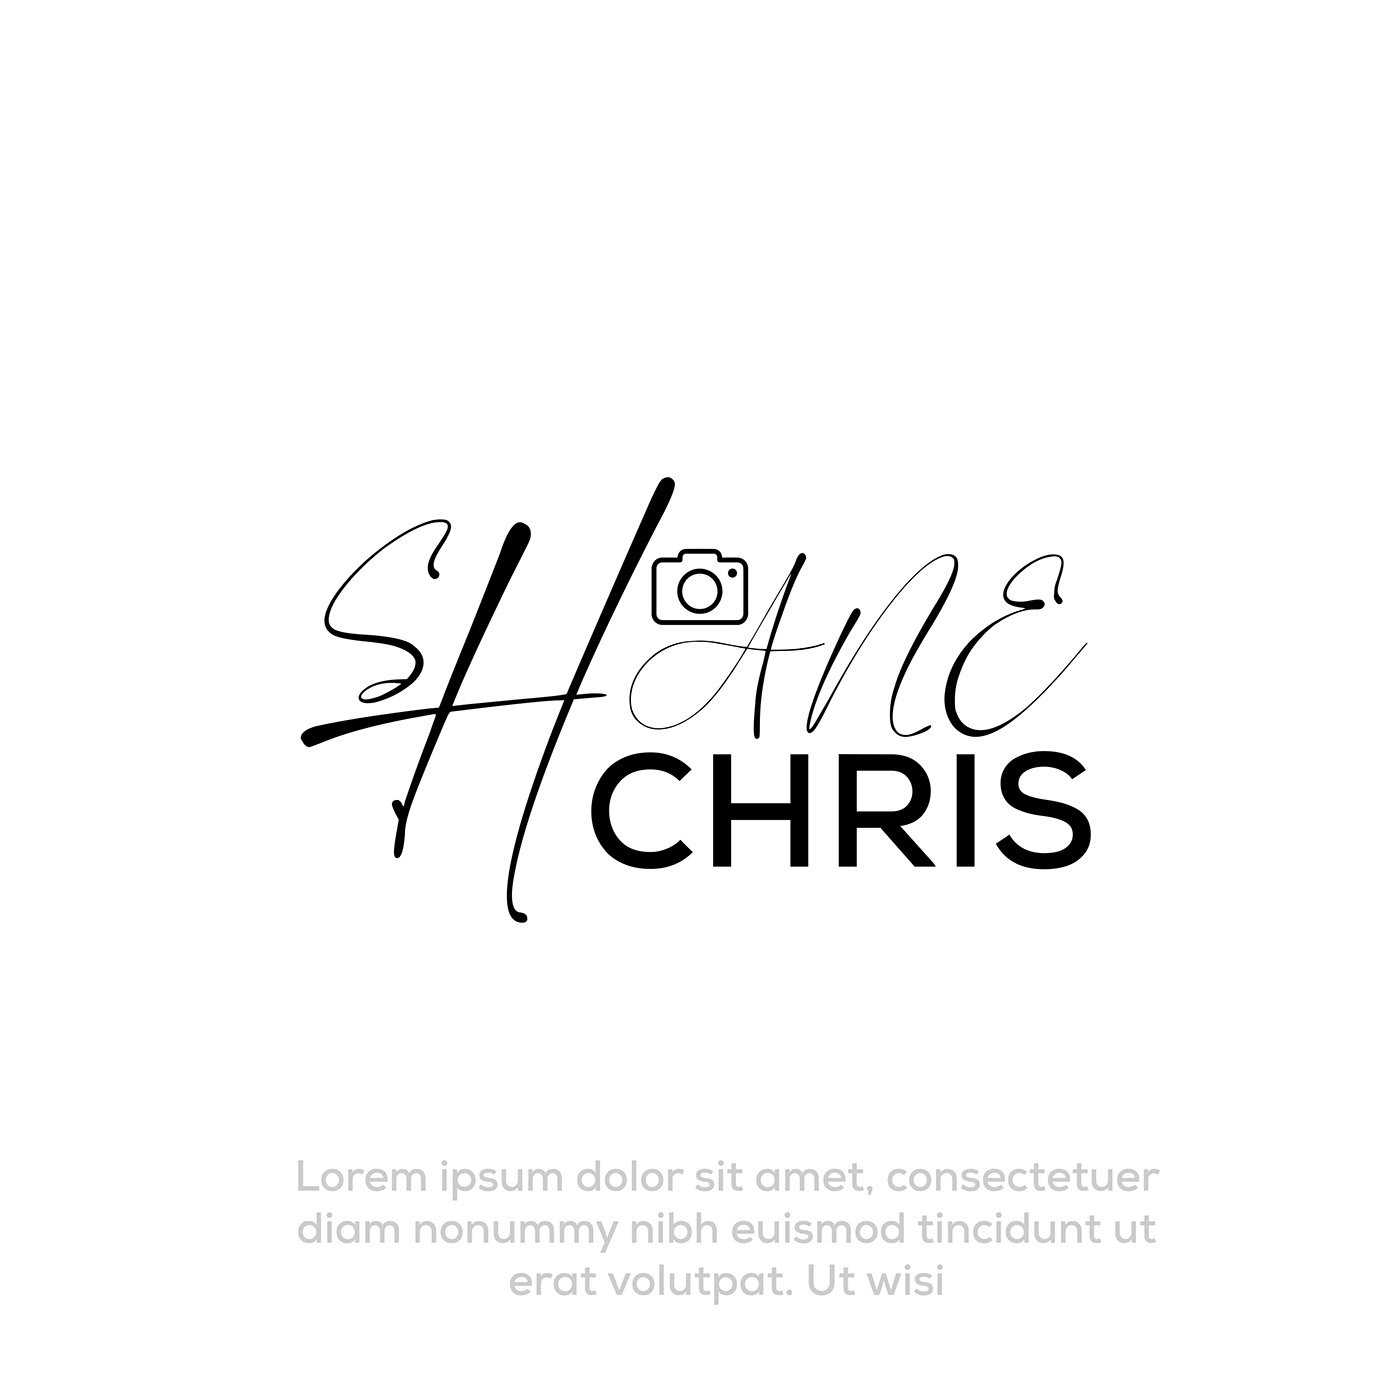 Advertising  brand identity design Logo Design marketing   minimalist modern professional siganture signature logo